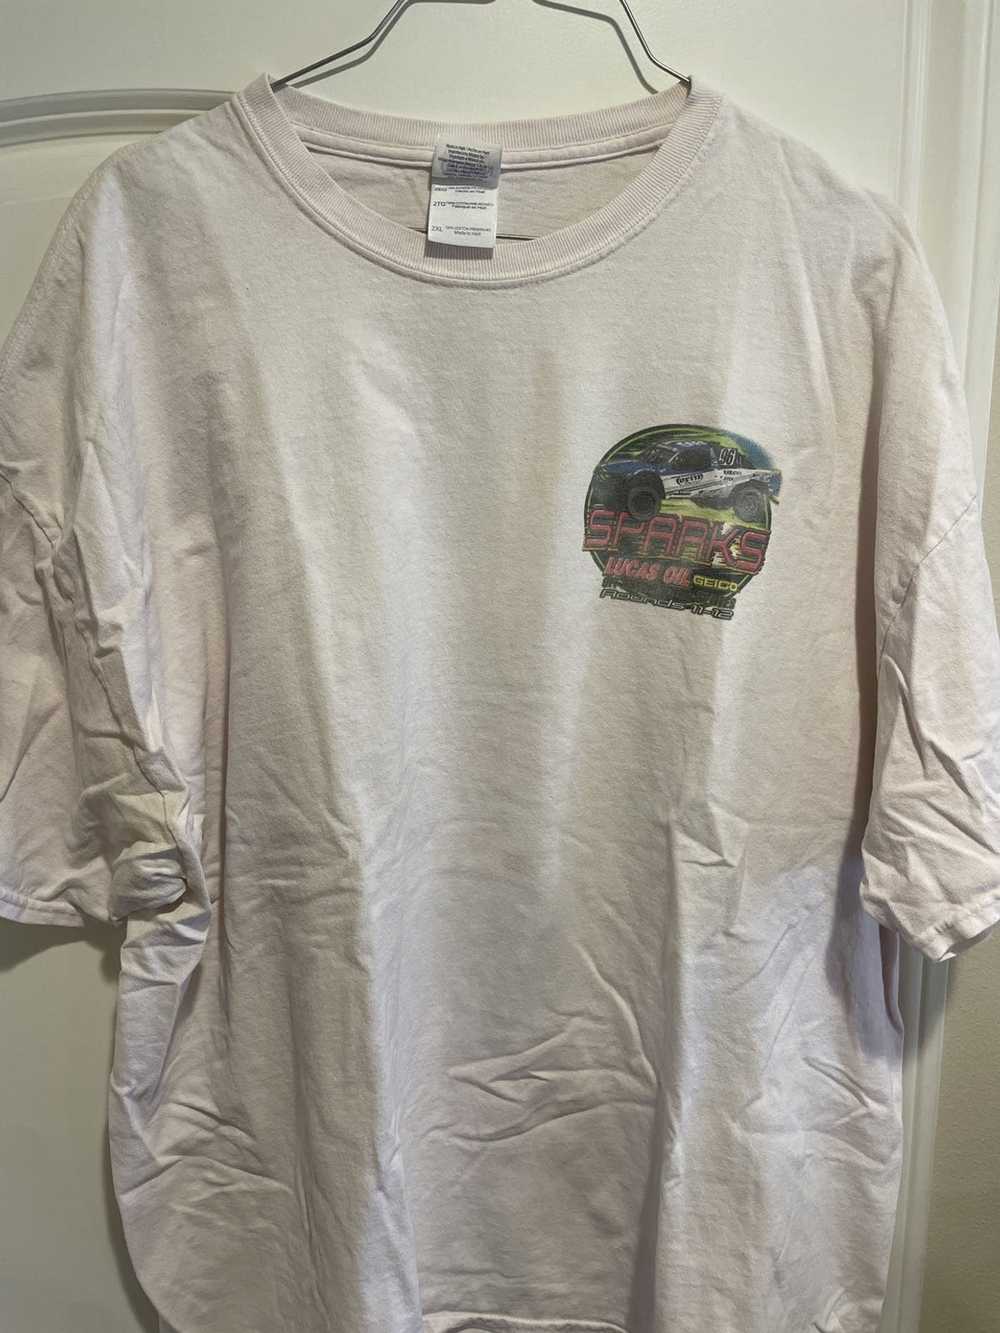 Racing × Vintage Lucas oil off road racing t shirt - image 1